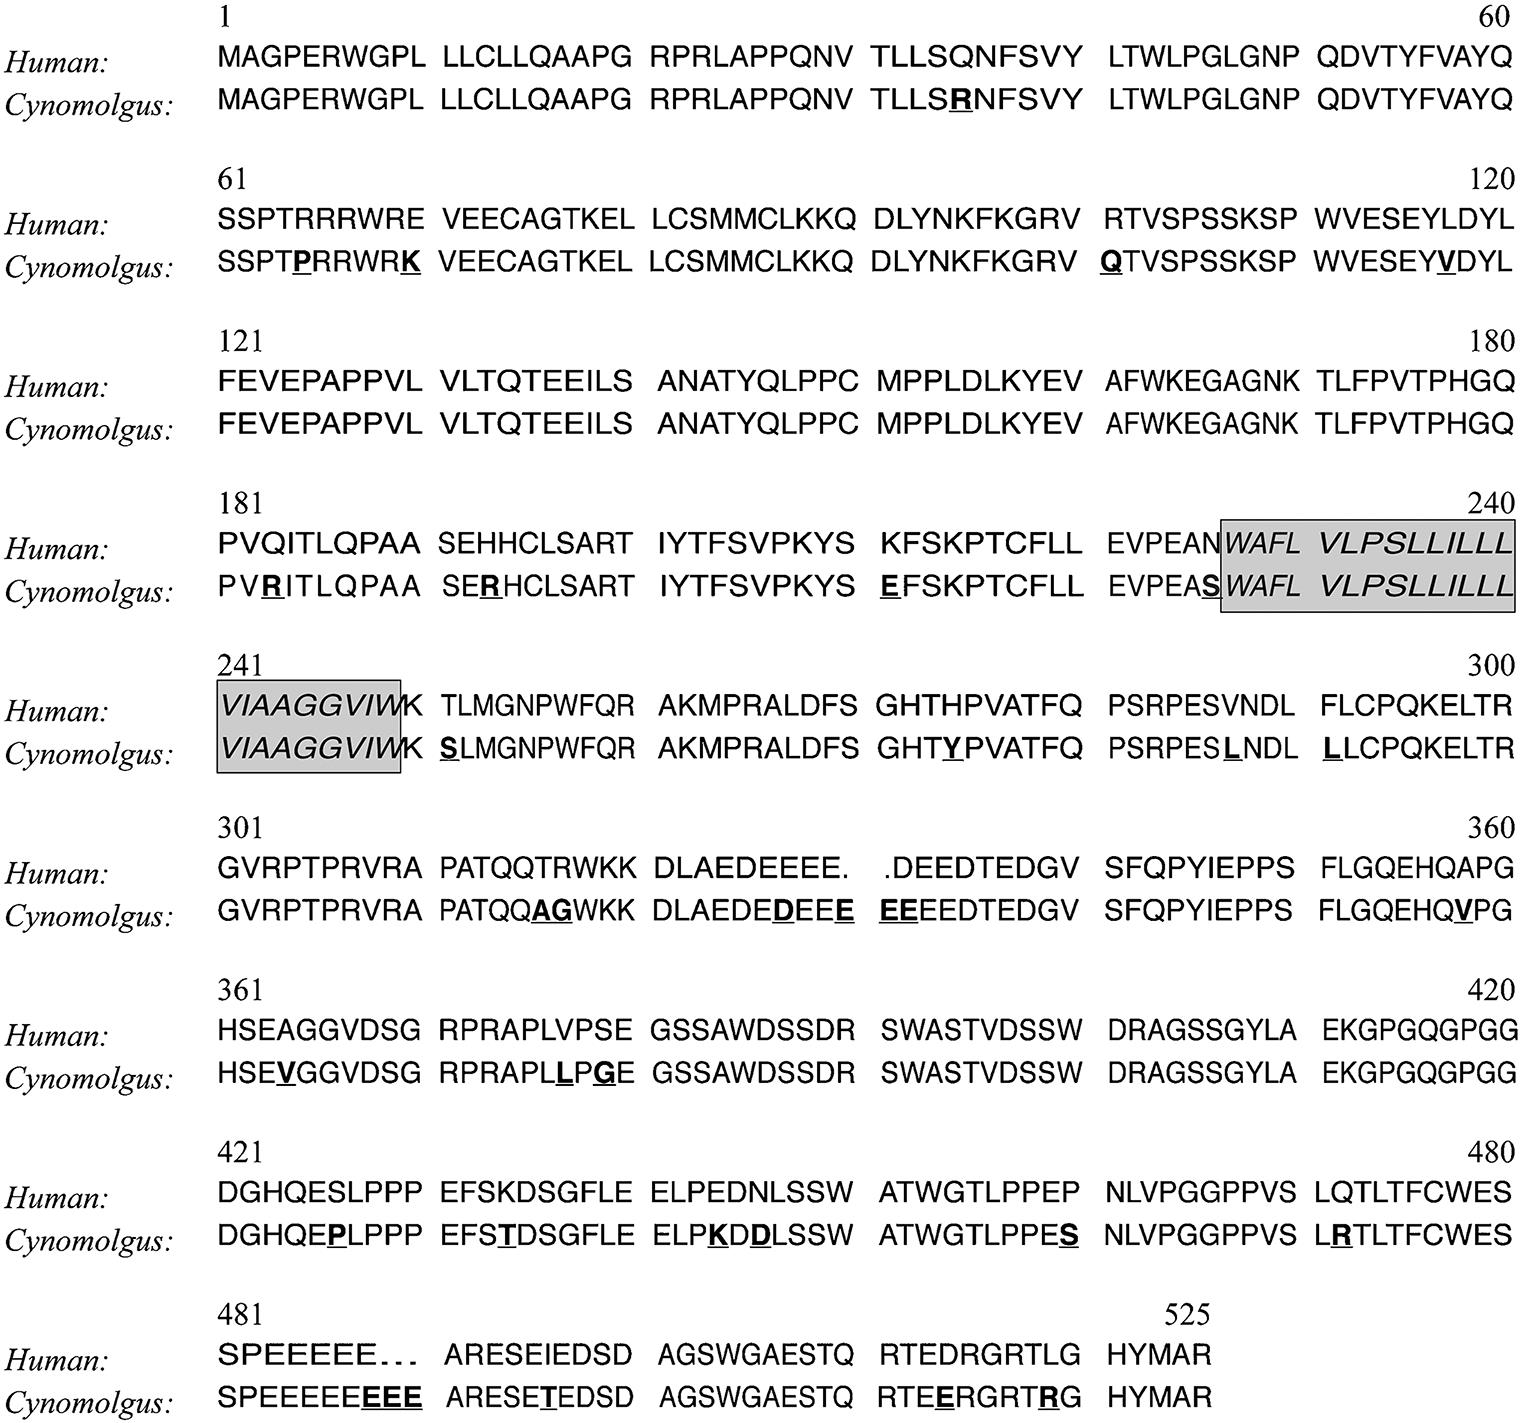 Amino acid sequence alignment of human and cynomolgus monkey interleukin-28 receptor α